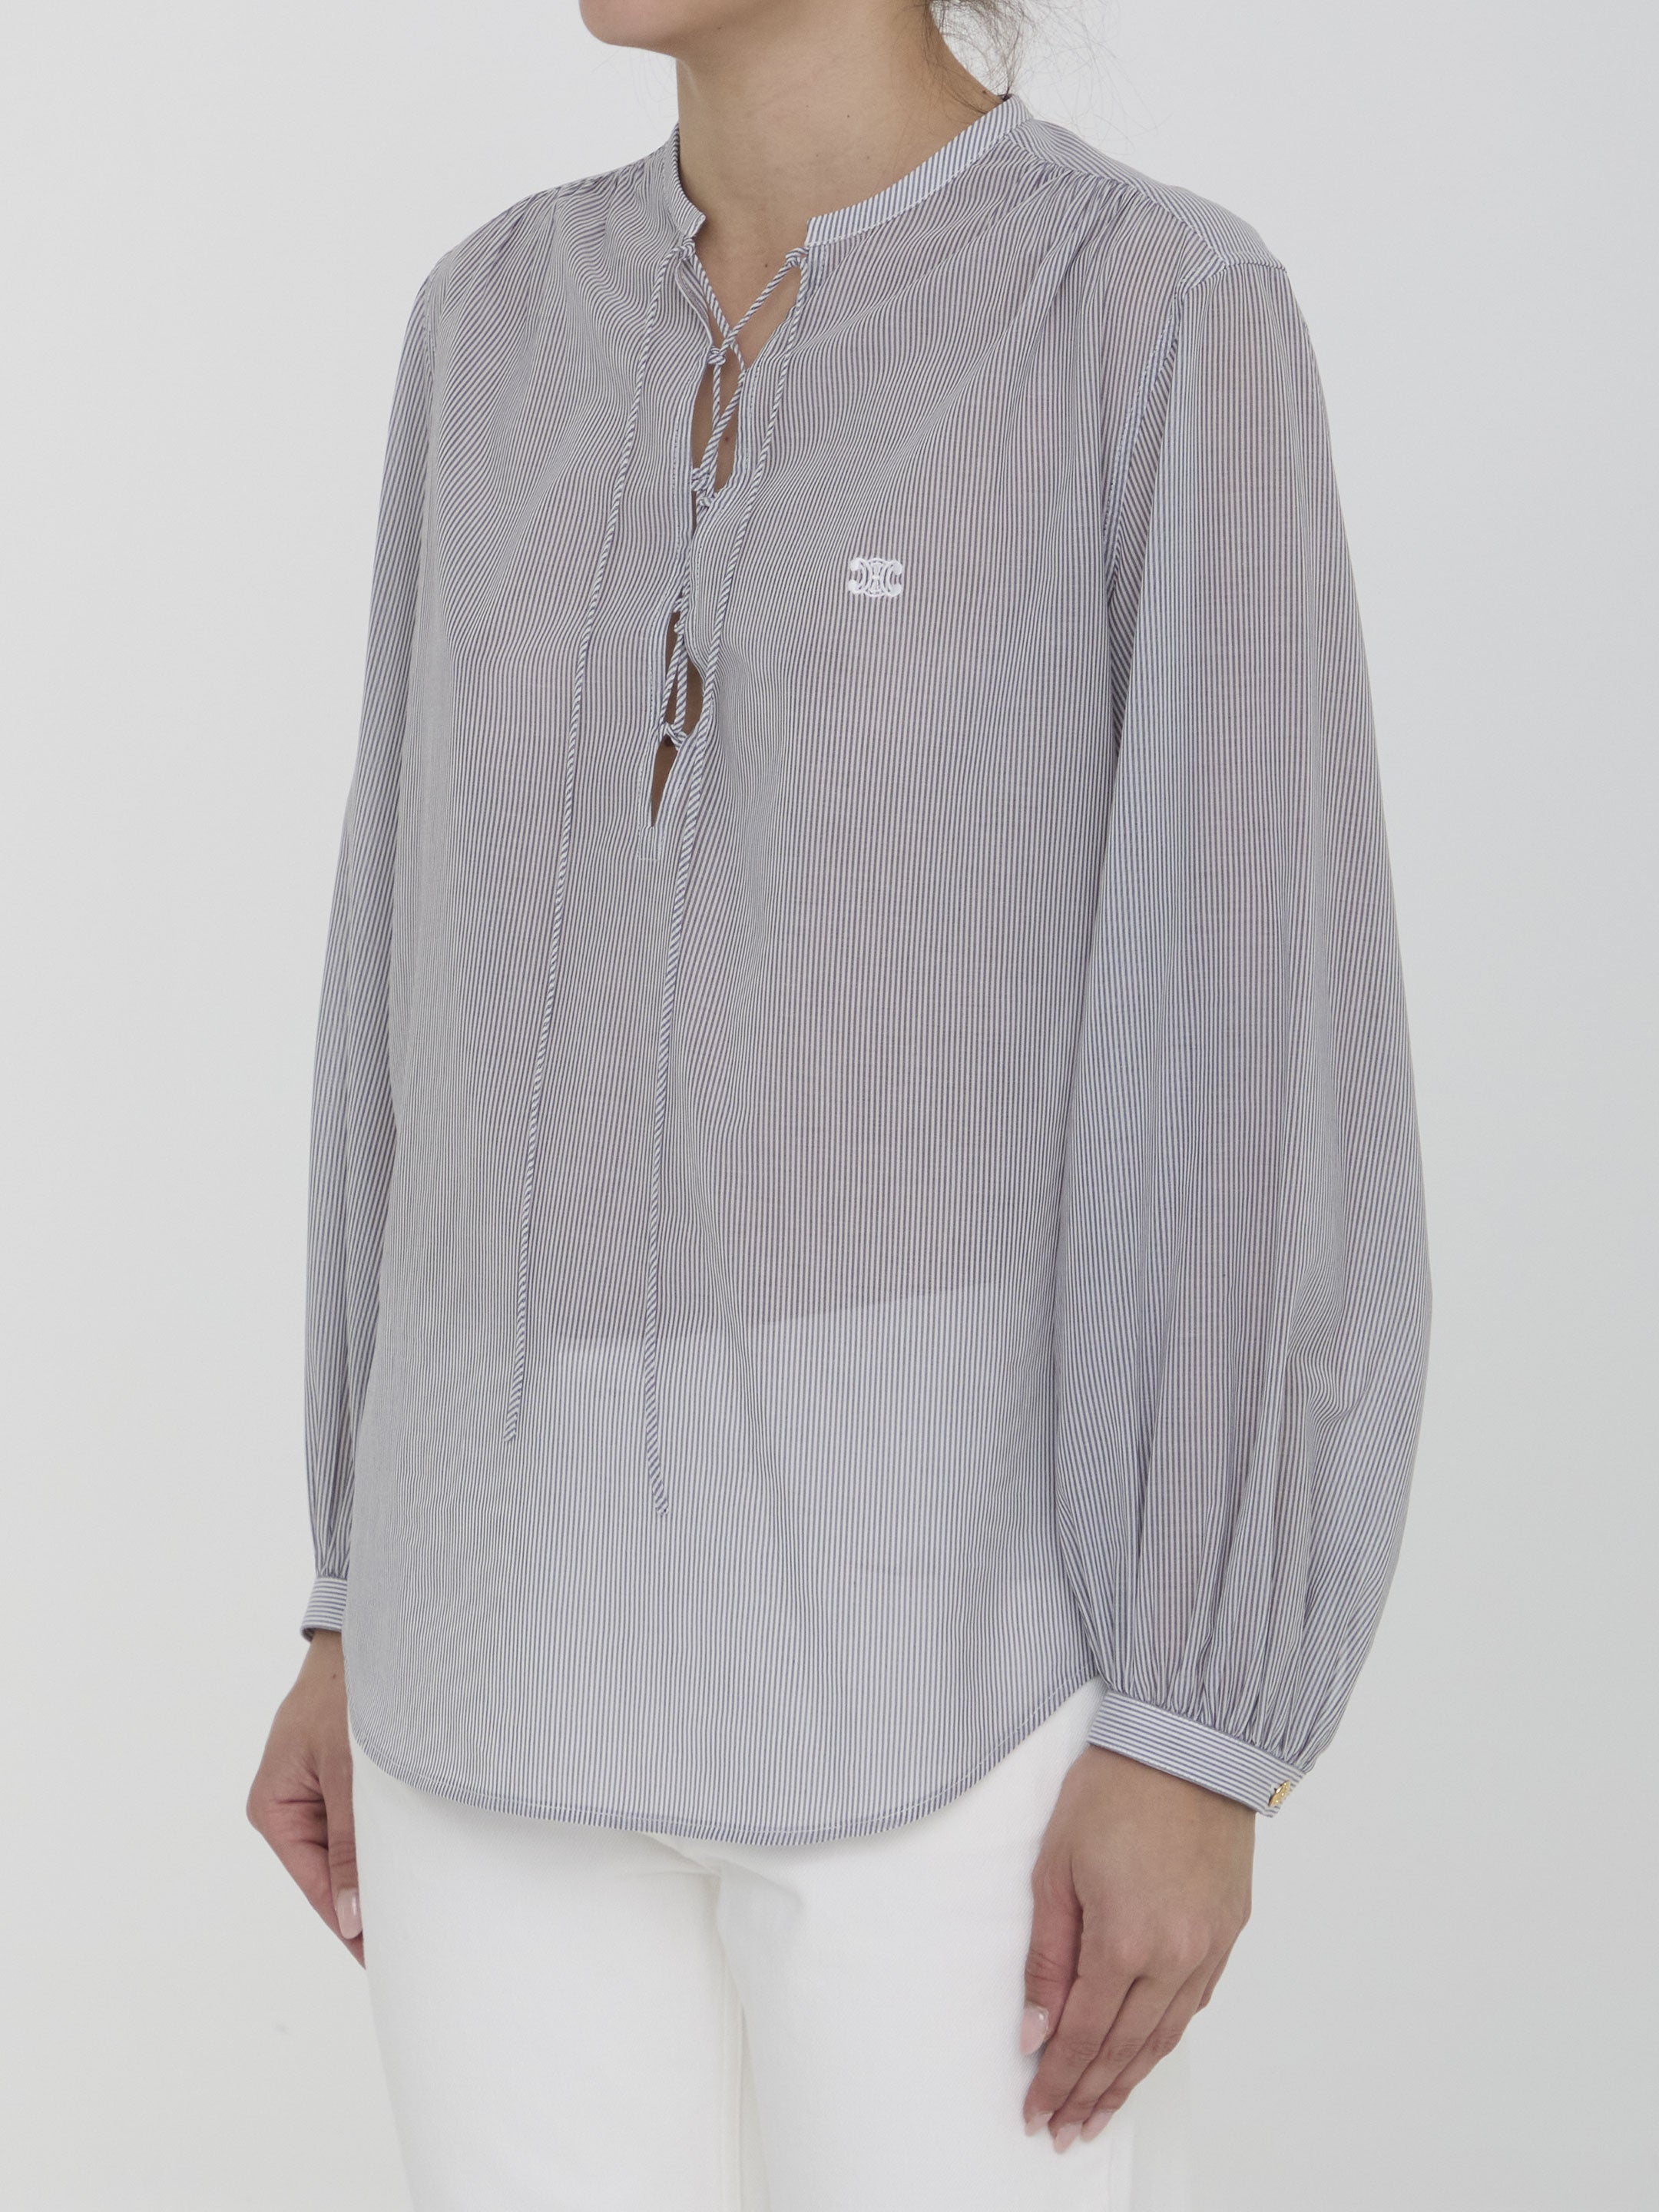 CELINE-OUTLET-SALE-Romy-blouse-Blusen-ARCHIVE-COLLECTION-2.jpg